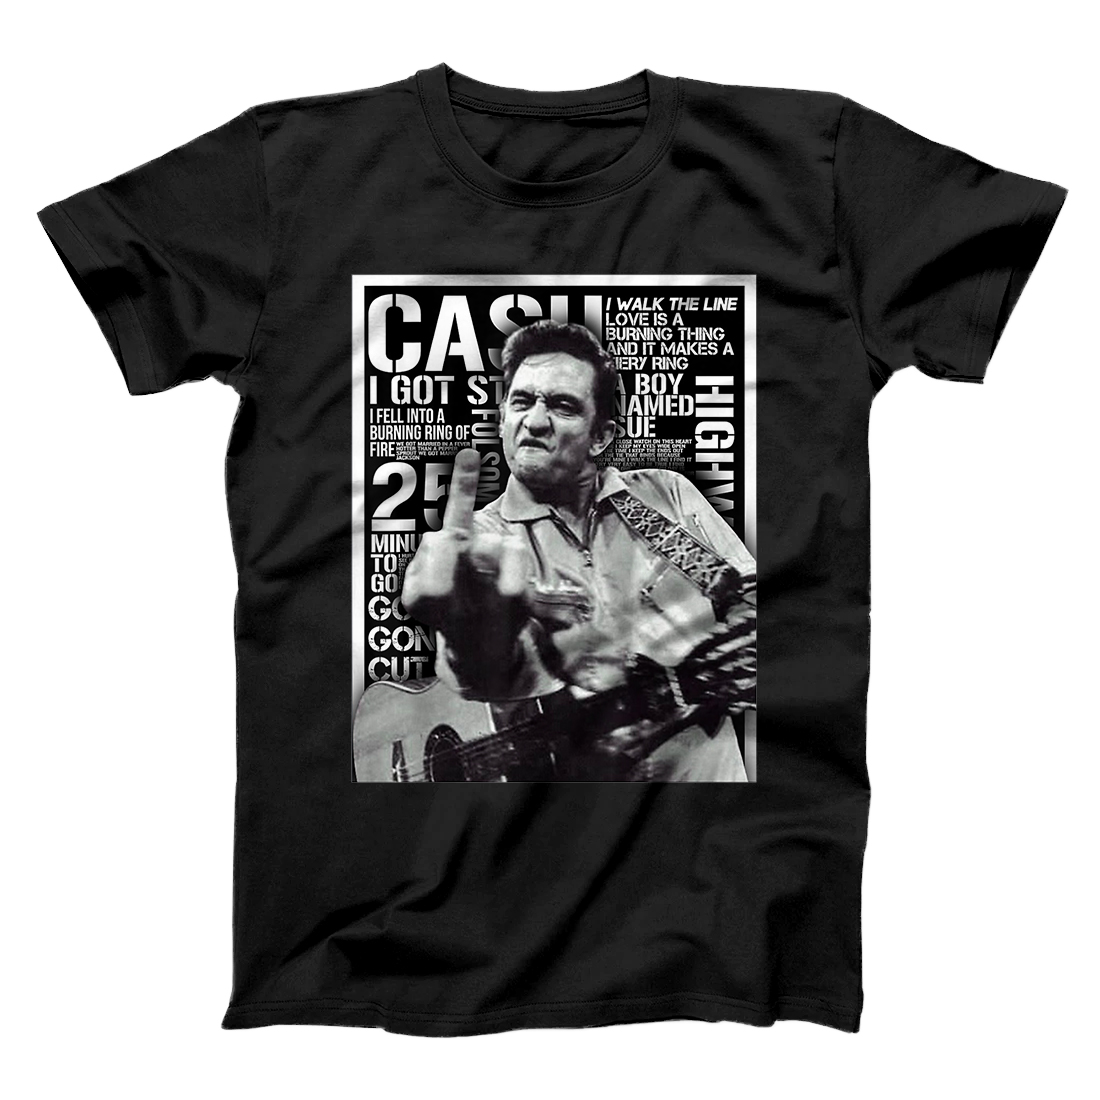 Personalized Retro Cash Memphis outlaw Tee T-Shirt